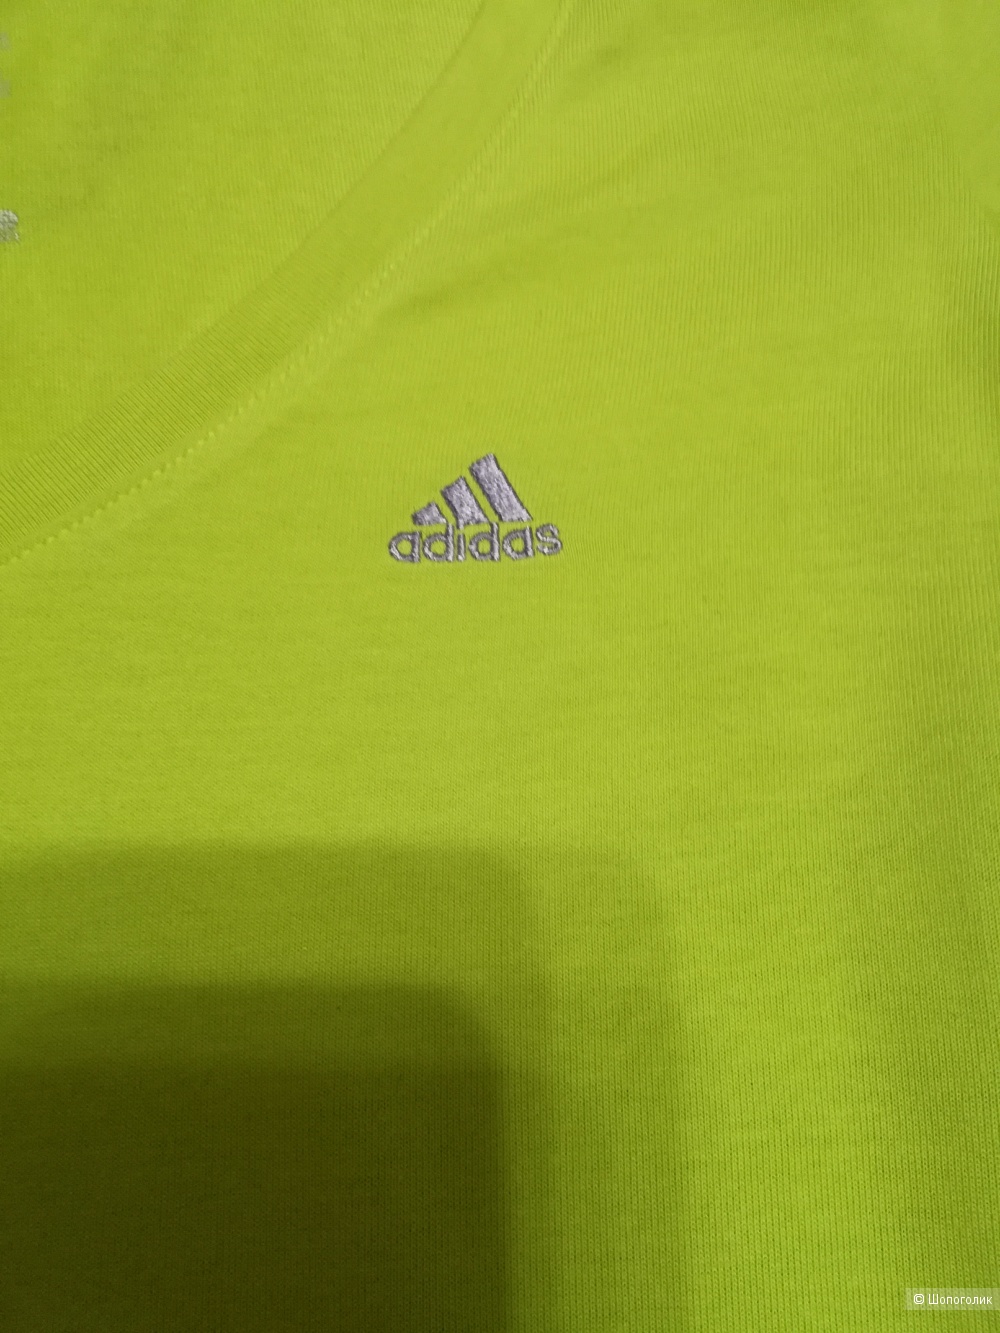 Футболка "Adidas", размер XS